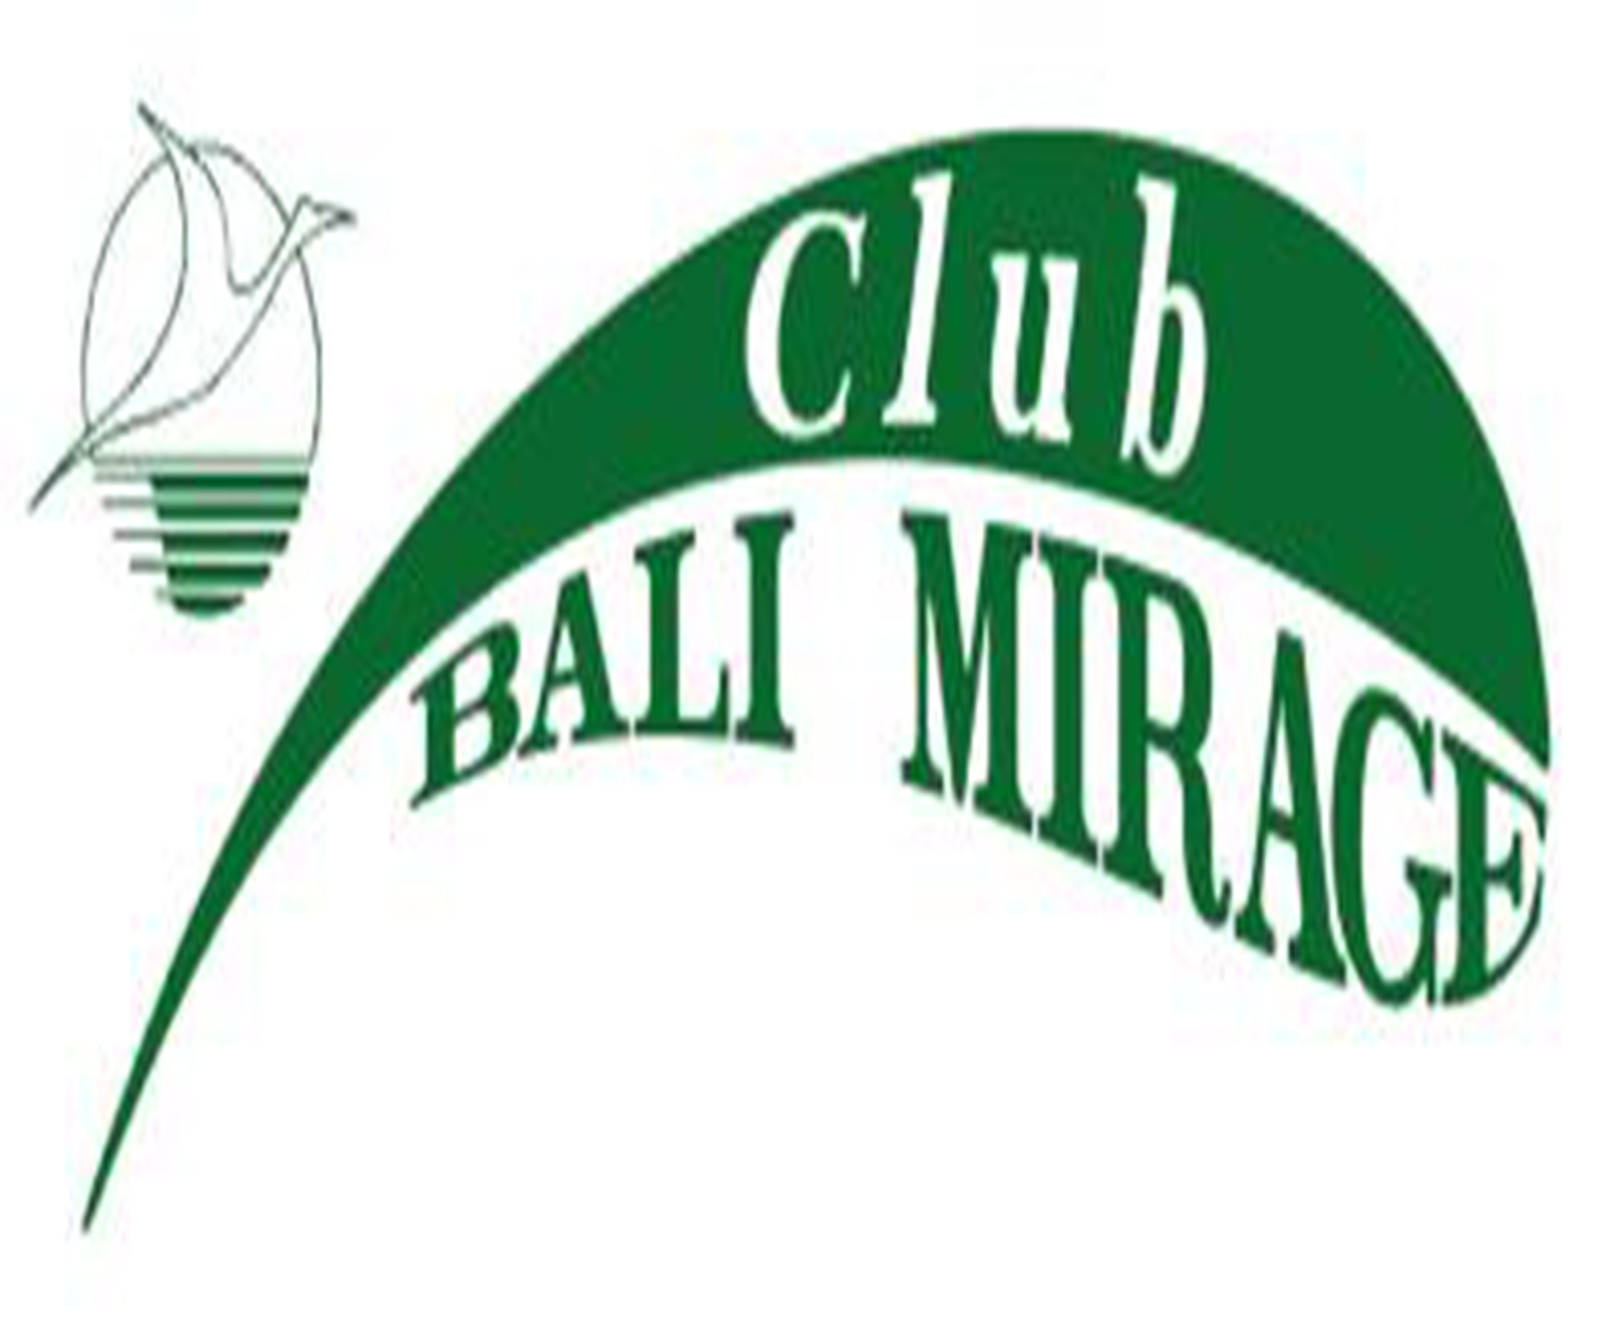 
Club Bali Mirage